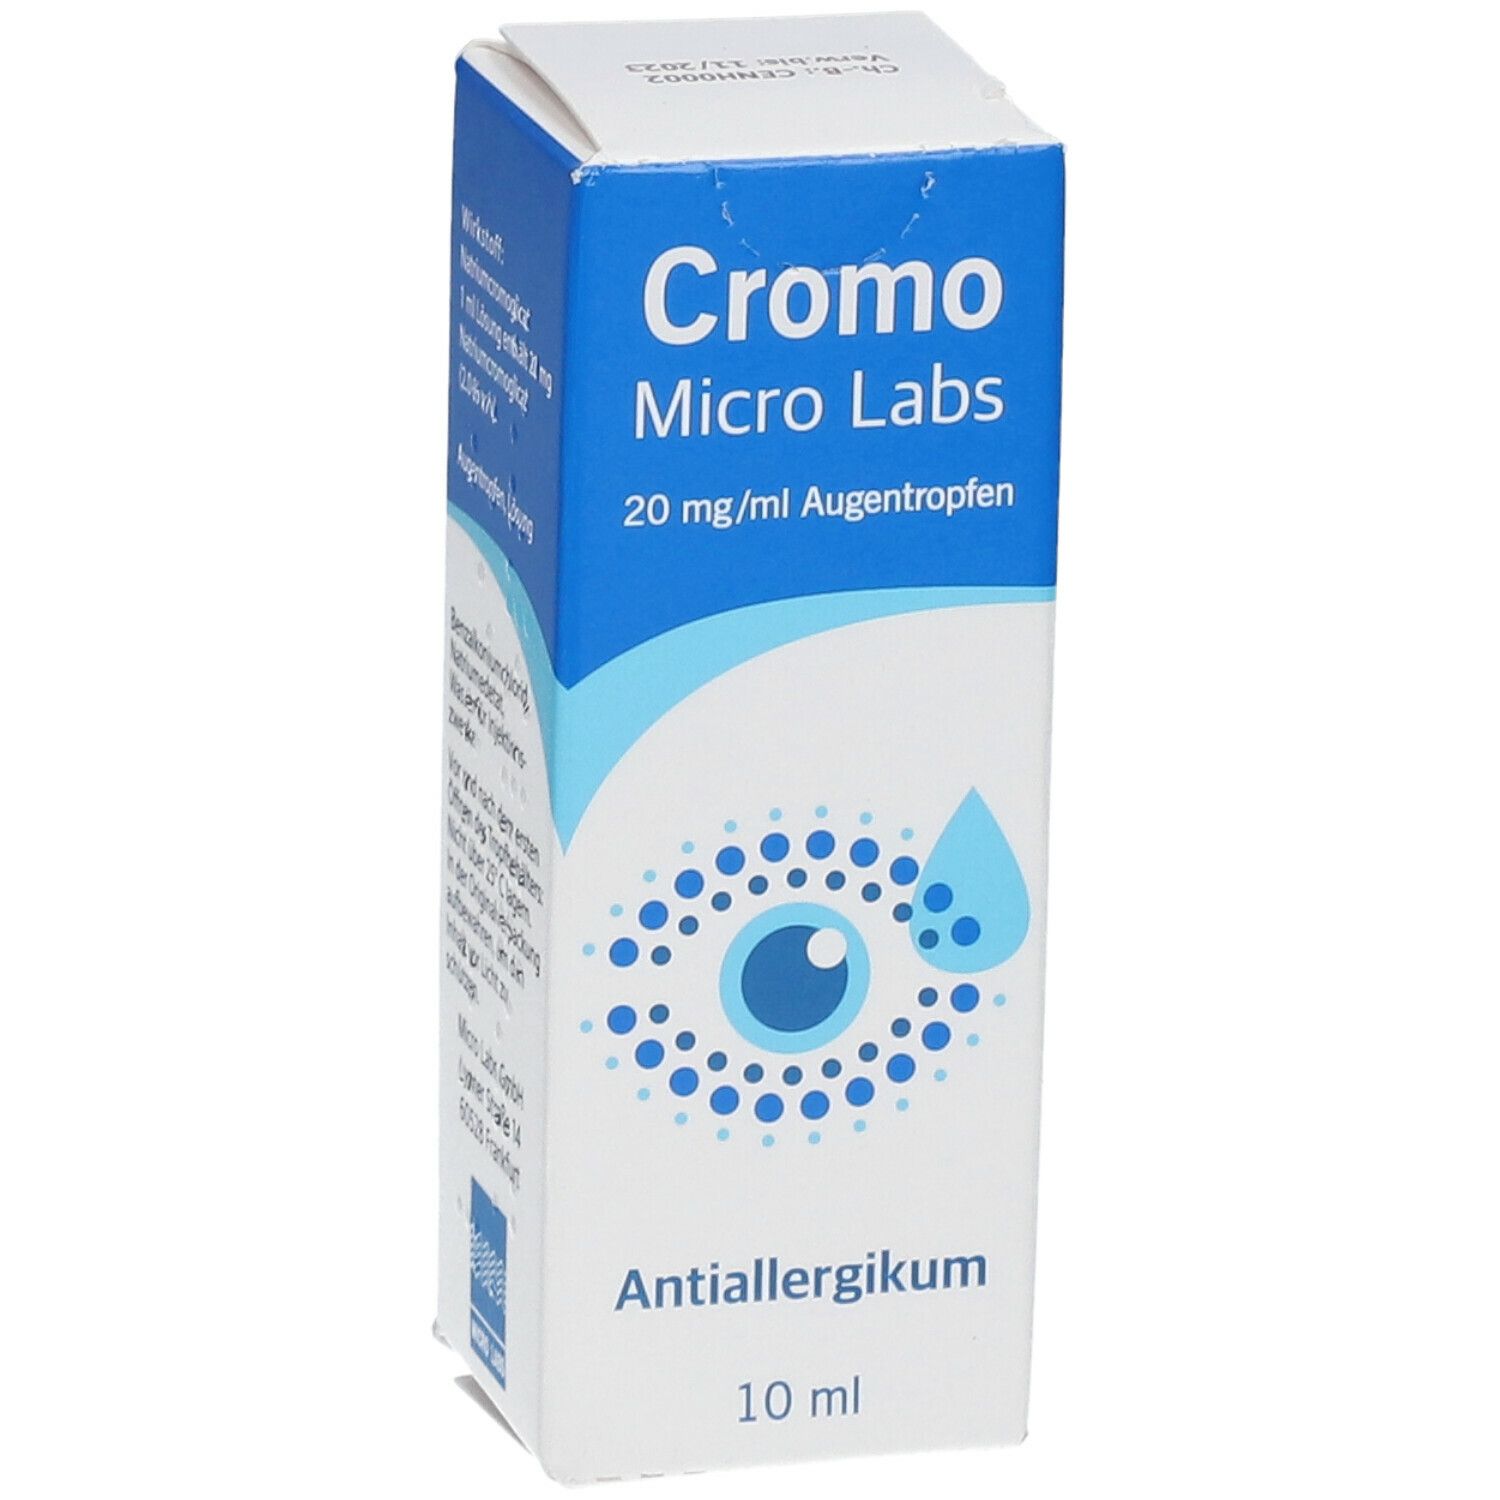 Cromo Micro Labs 20 mg/ml